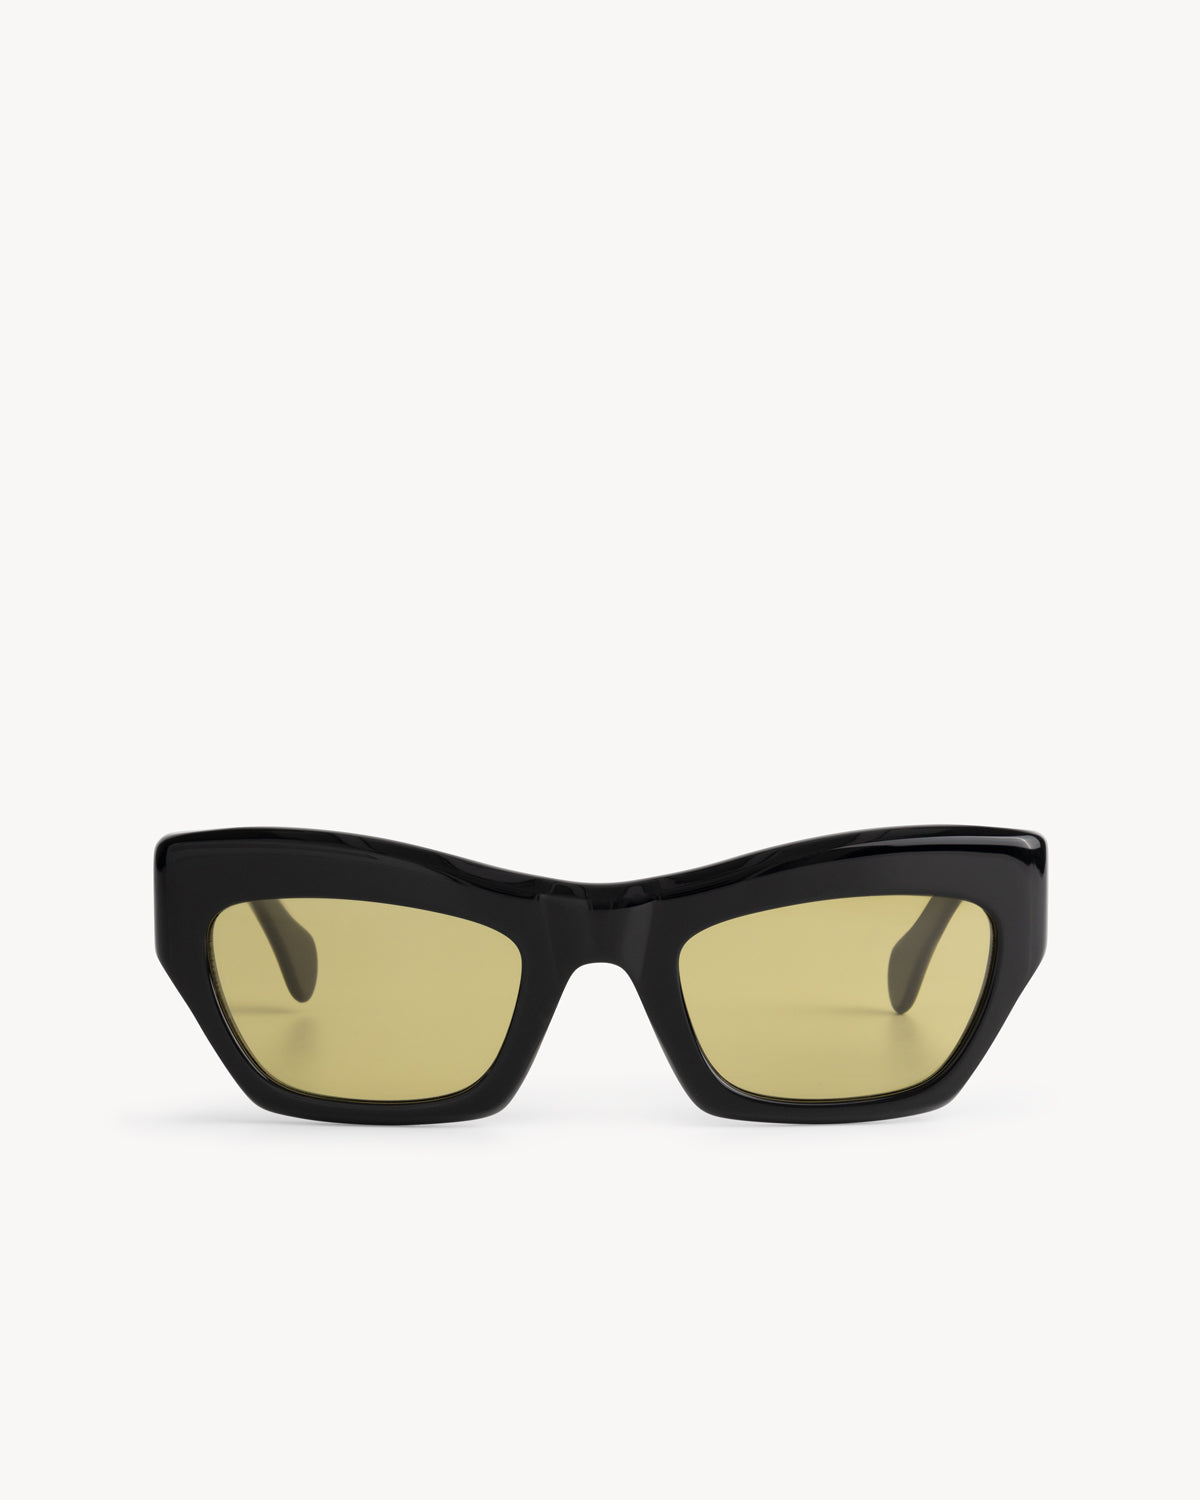 Port Tanger Ayreen Sunglasses in Black Acetate and Warm Olive Lenses 1